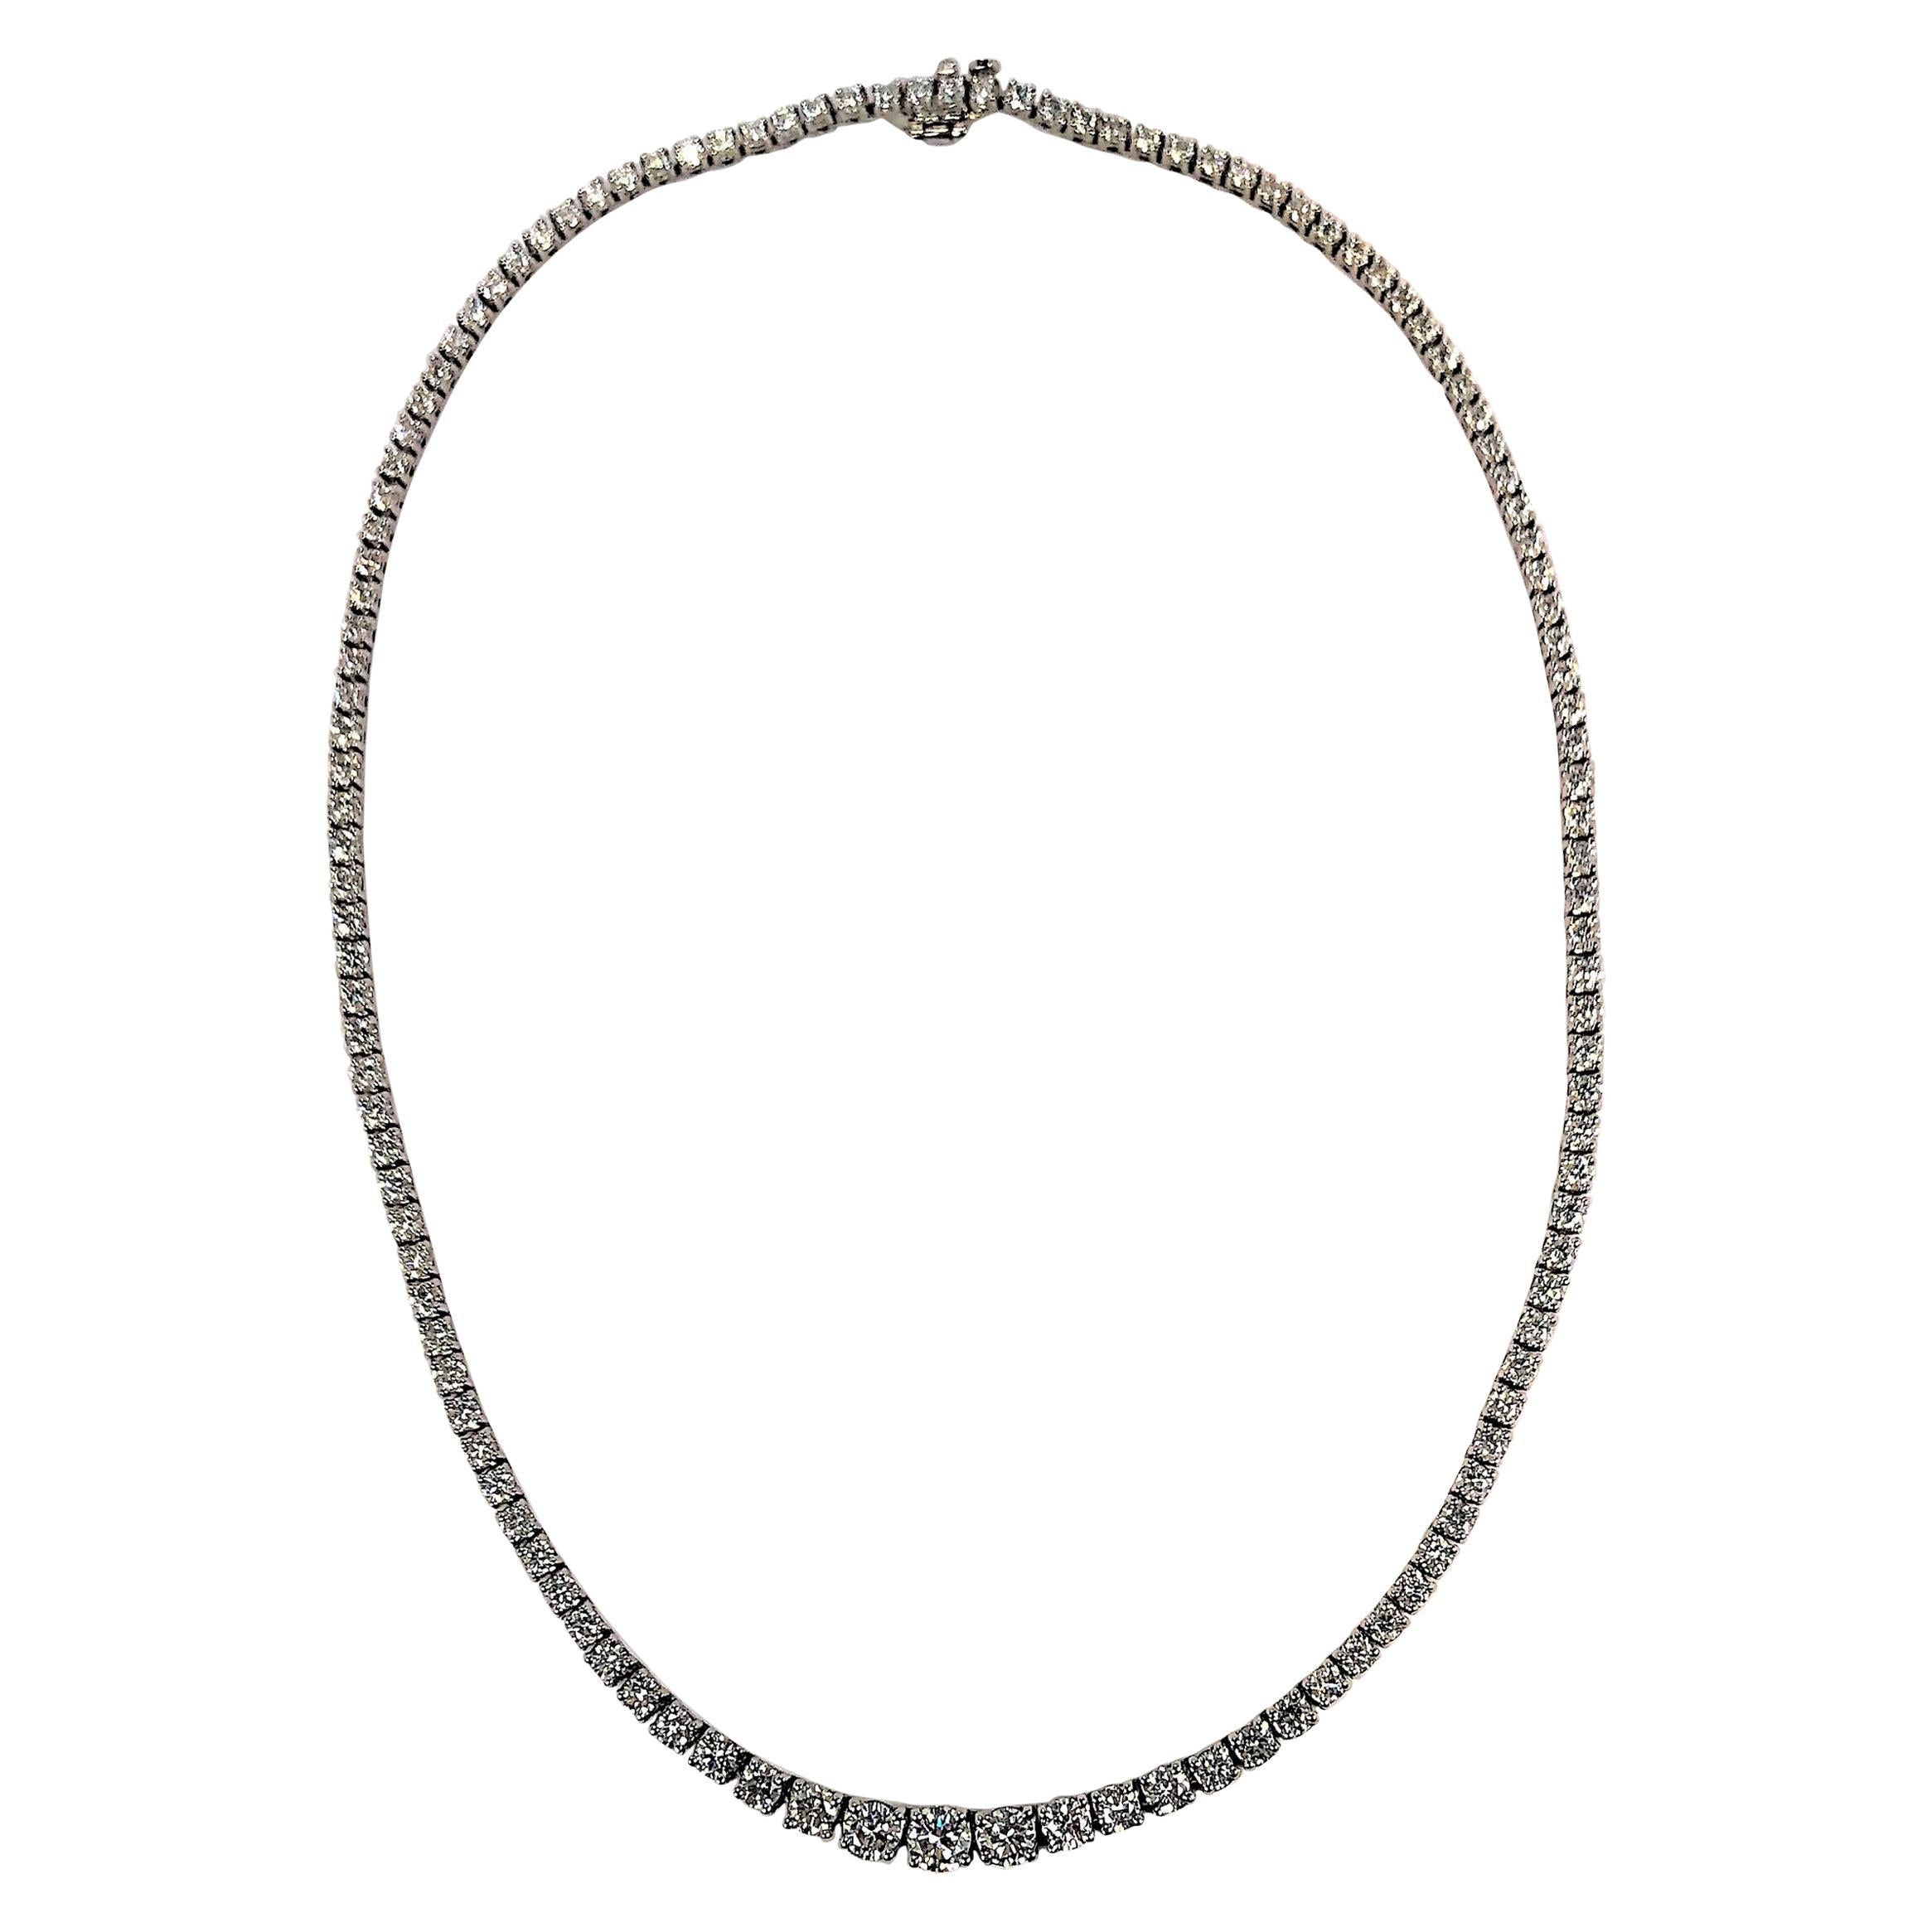 Graduated Diamond Riviera Necklace Set in Platinum 9.78 Carat Total Weight